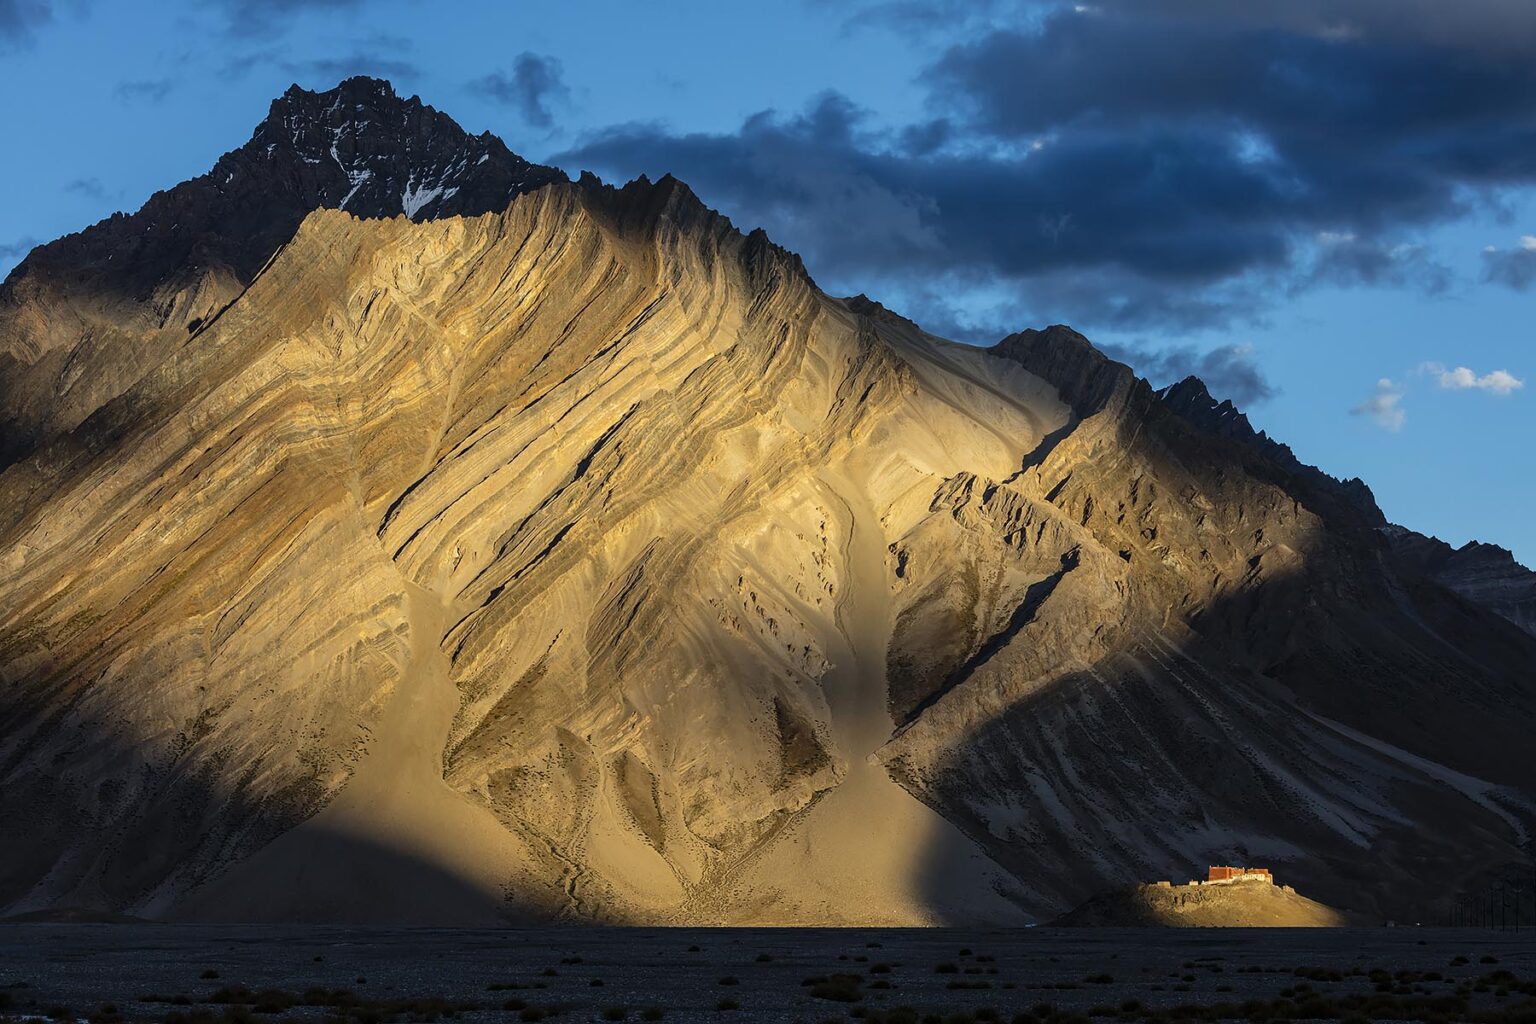 RANGDUM MONASTERY sits below Himalayan peaks in the Stod River Valley - ZANSKAR, LADAKH, INDIA